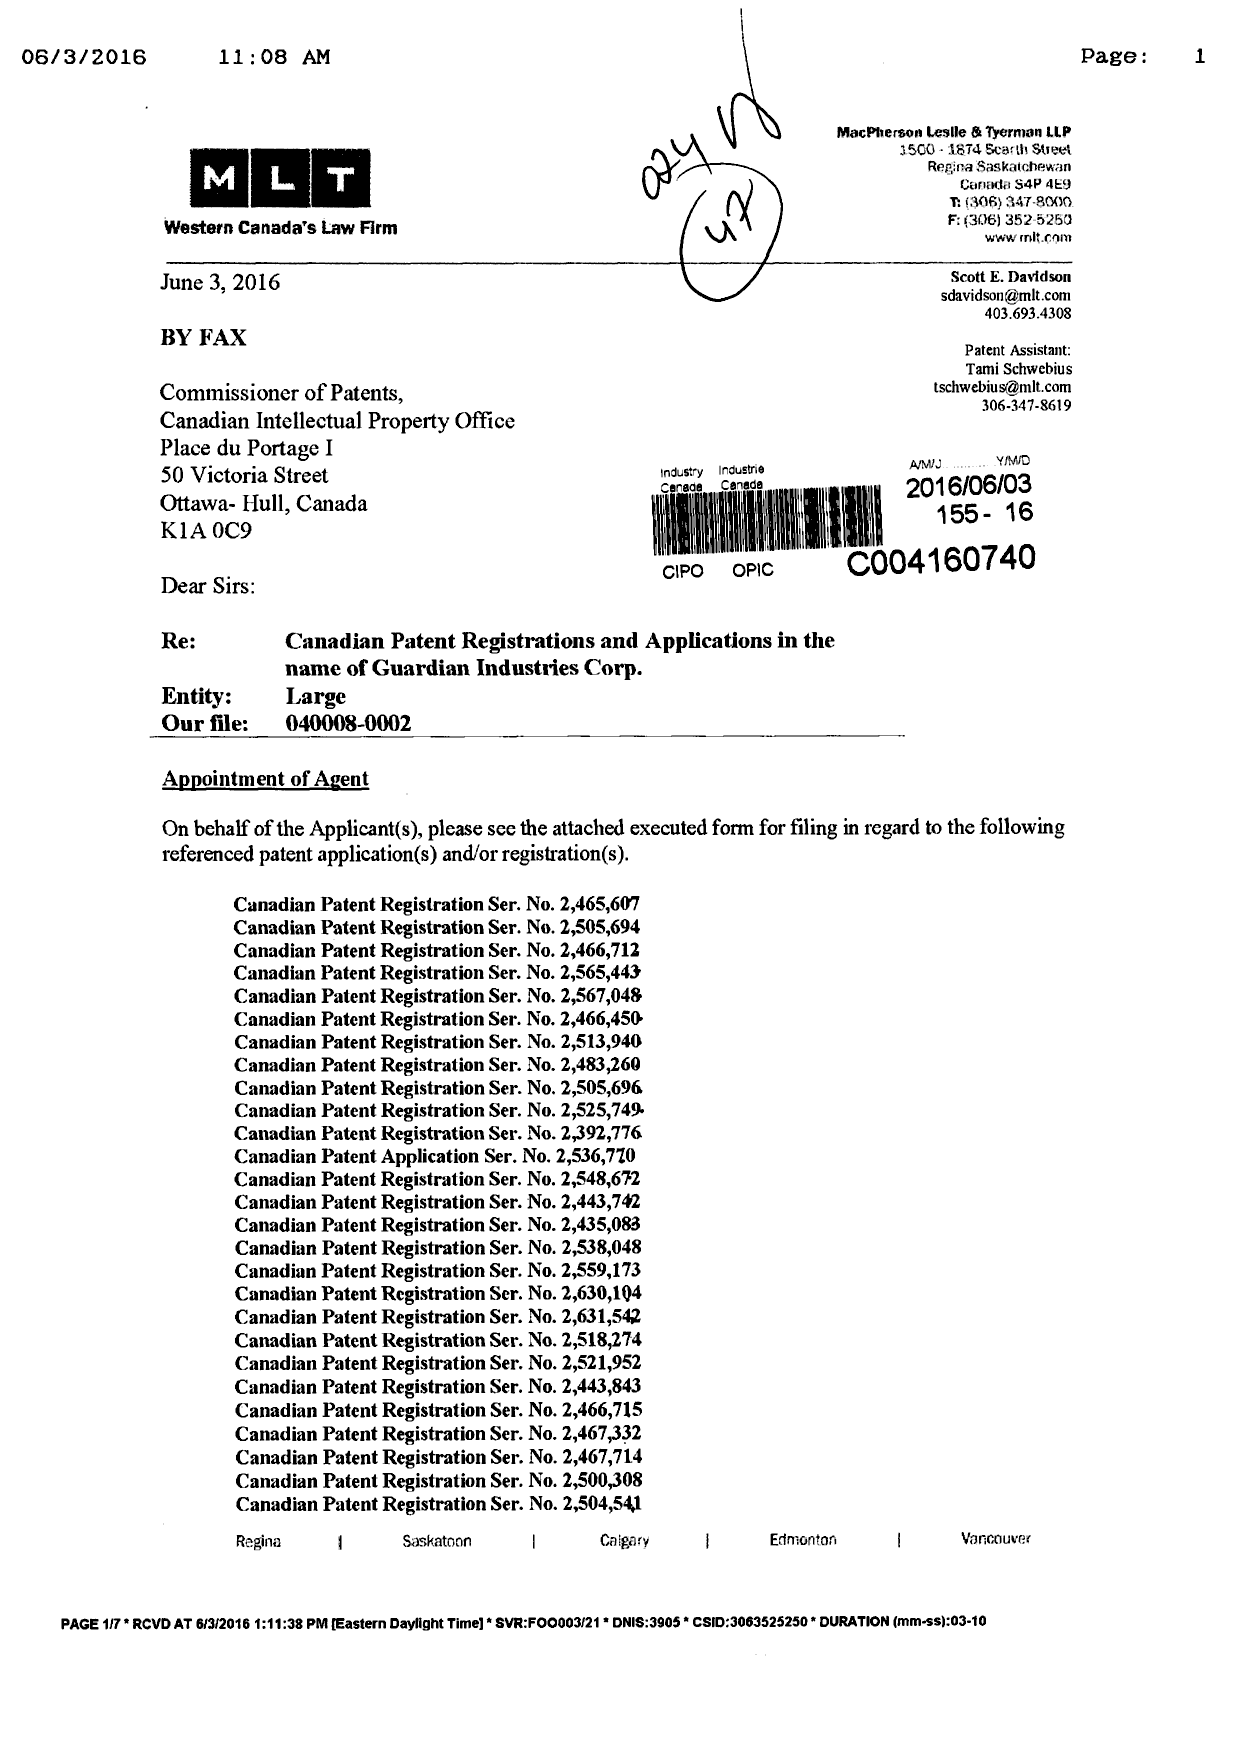 Canadian Patent Document 2483260. Correspondence 20151203. Image 1 of 7